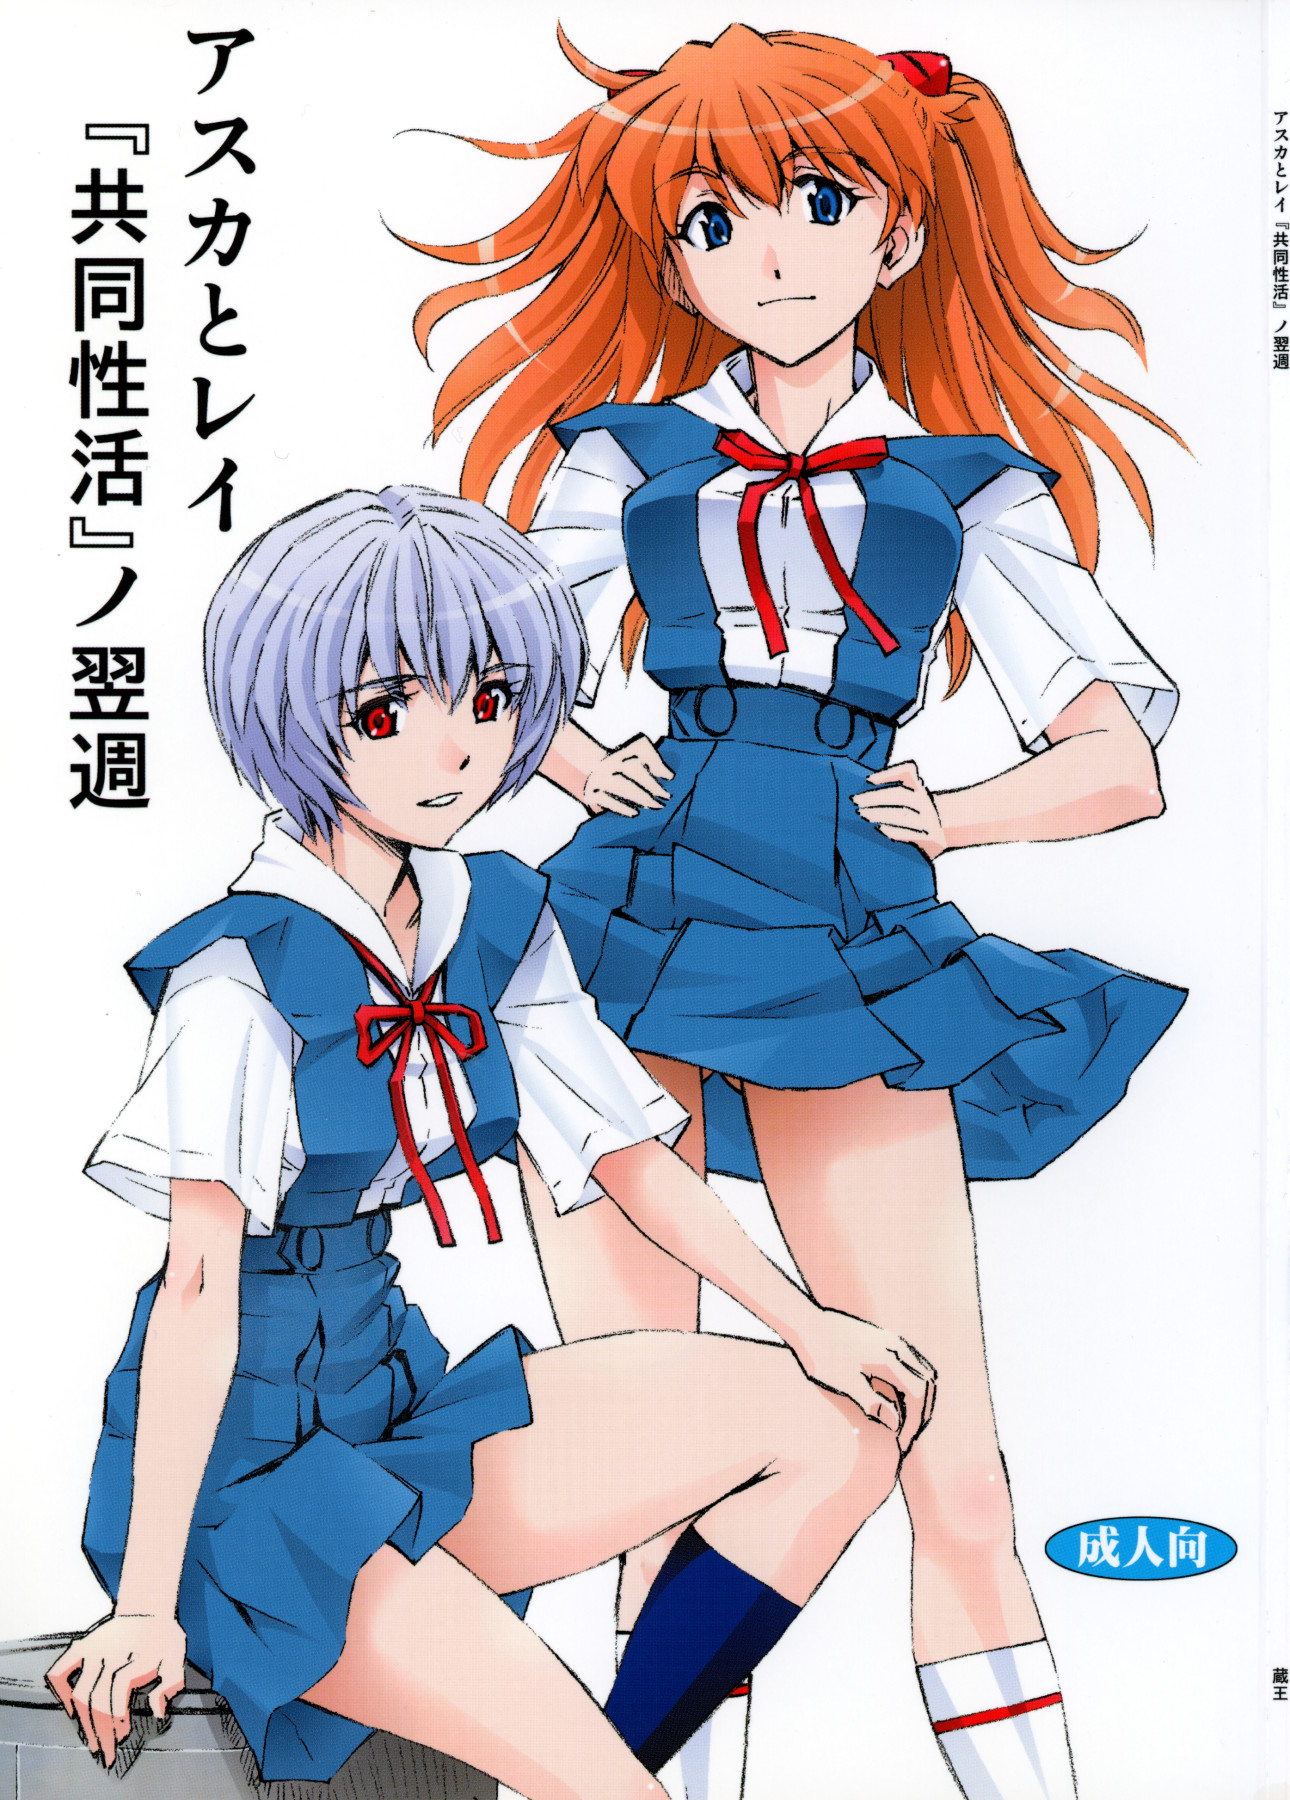 Hentai Manga Comic-The Week After Asukka And Rei's -Read-1